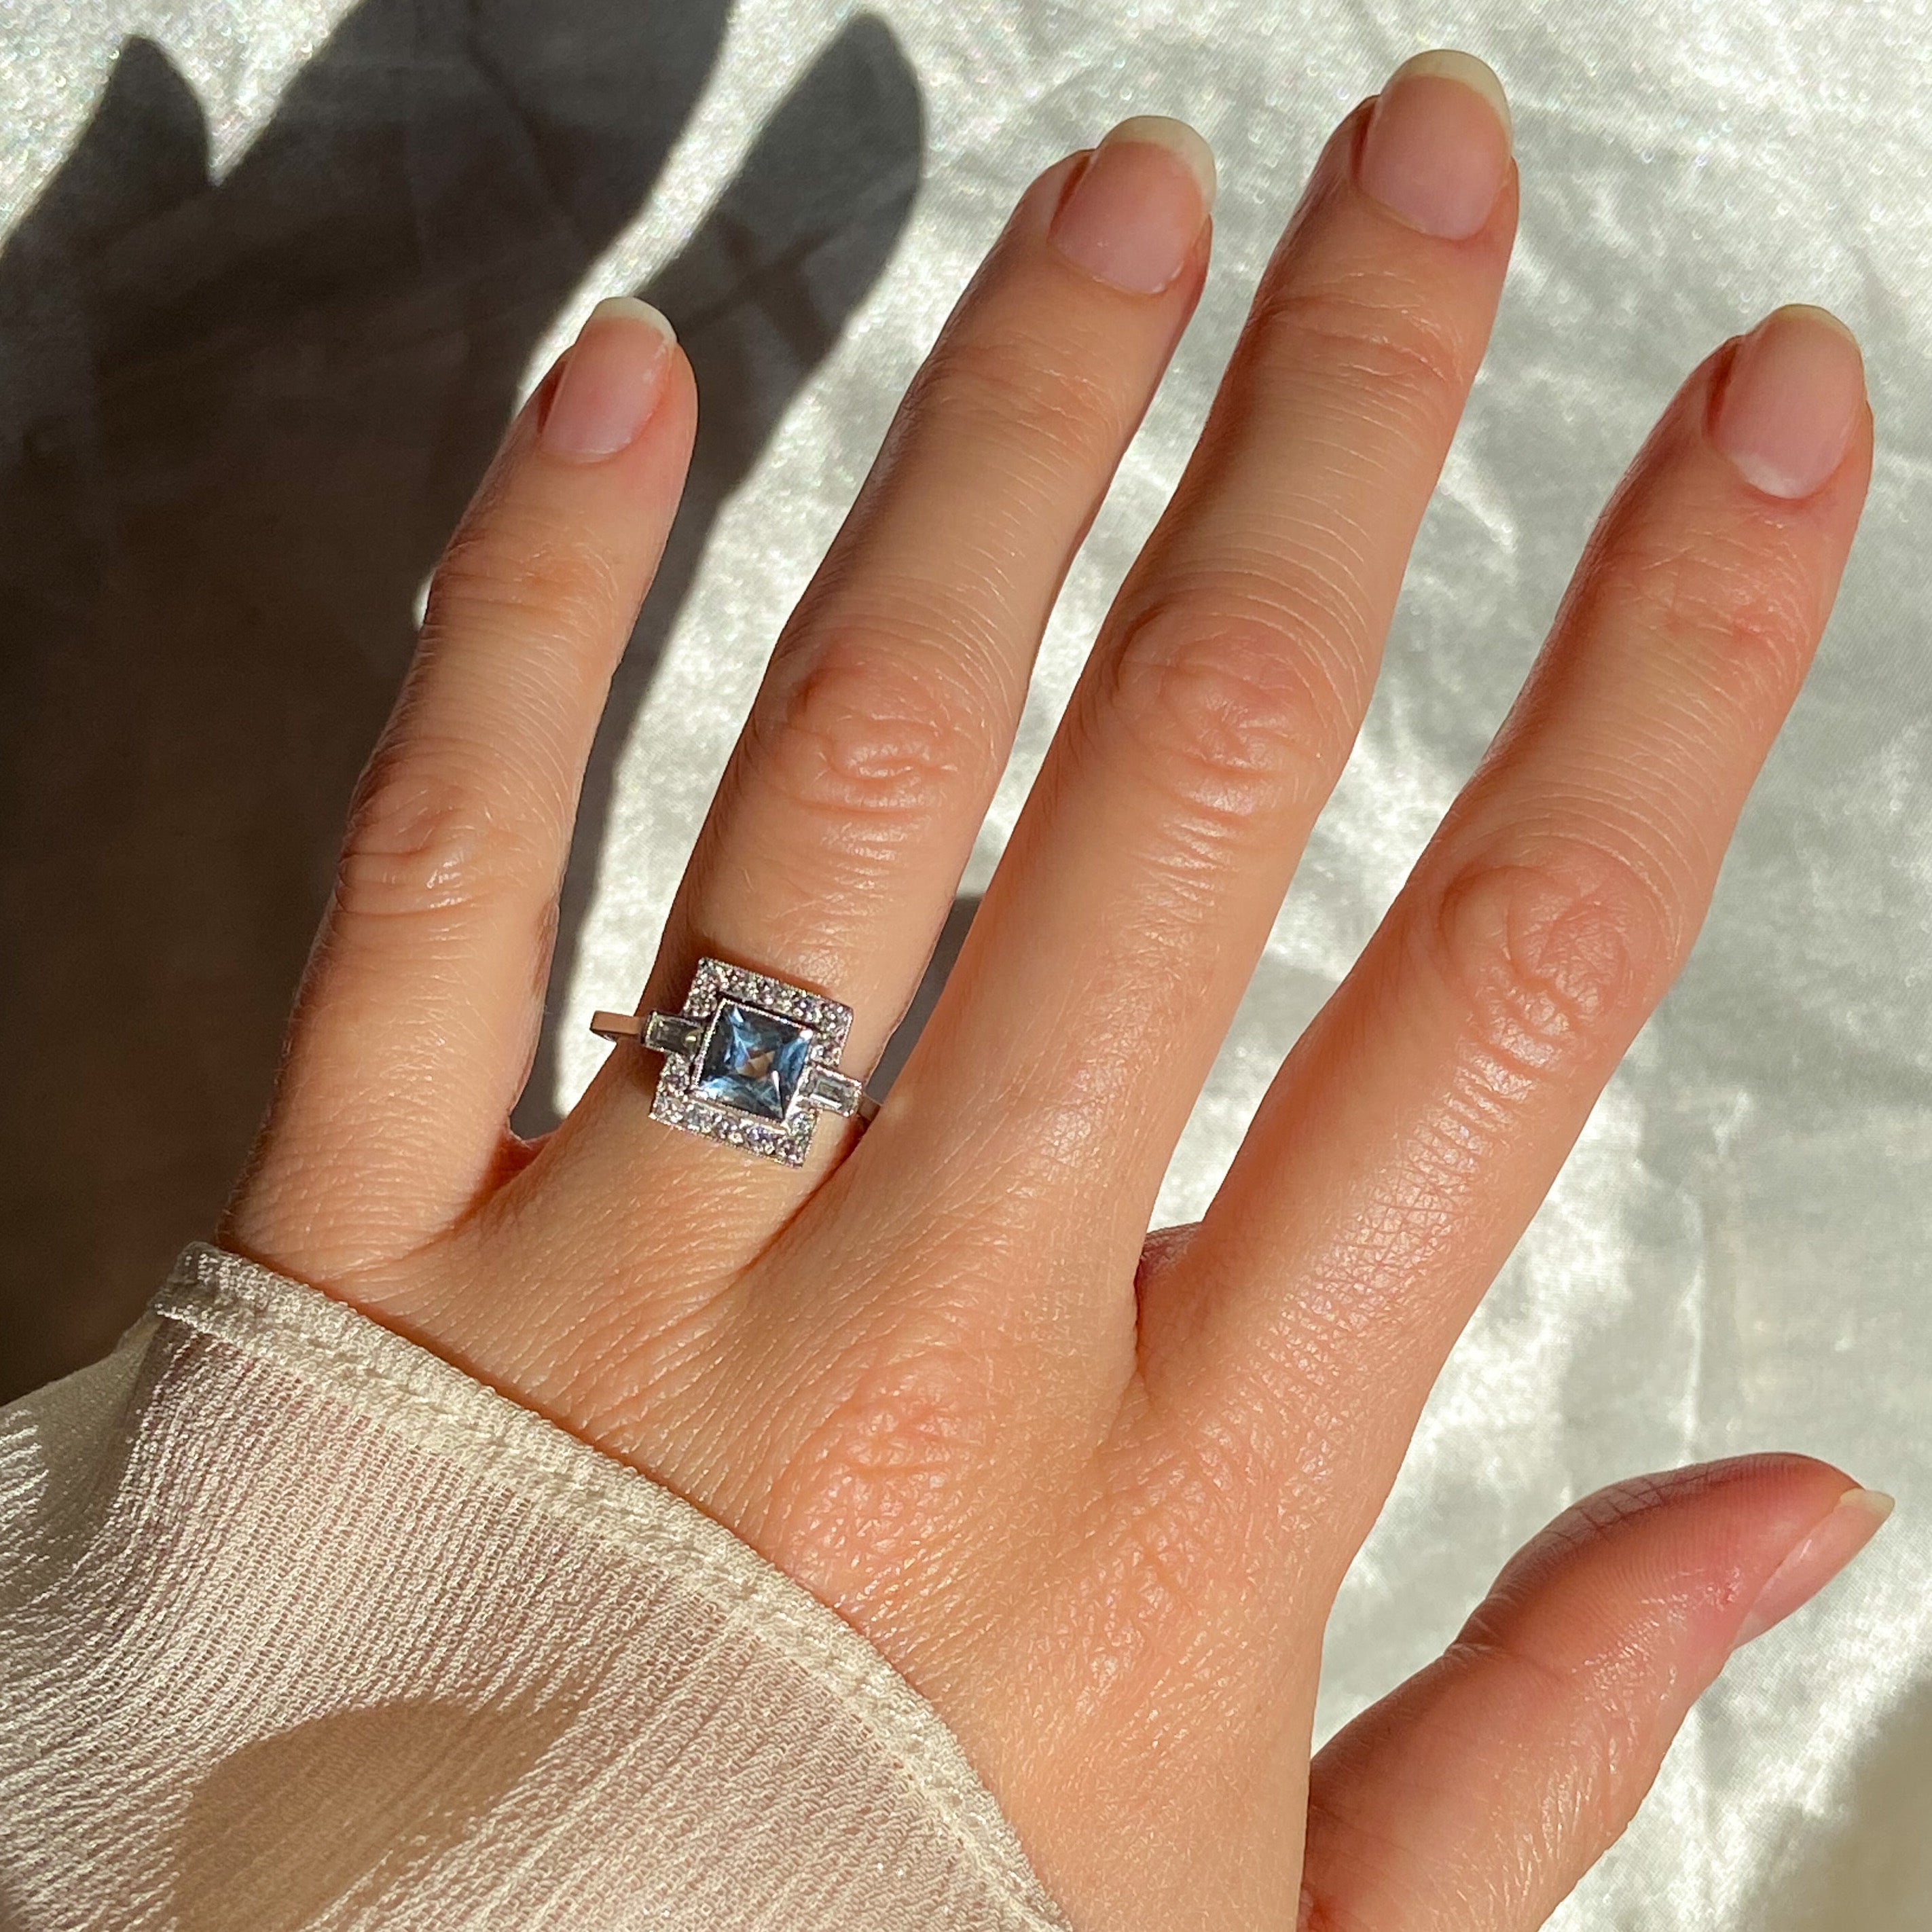 Aquamarine and Diamond Square Cut Art Deco Style Ring